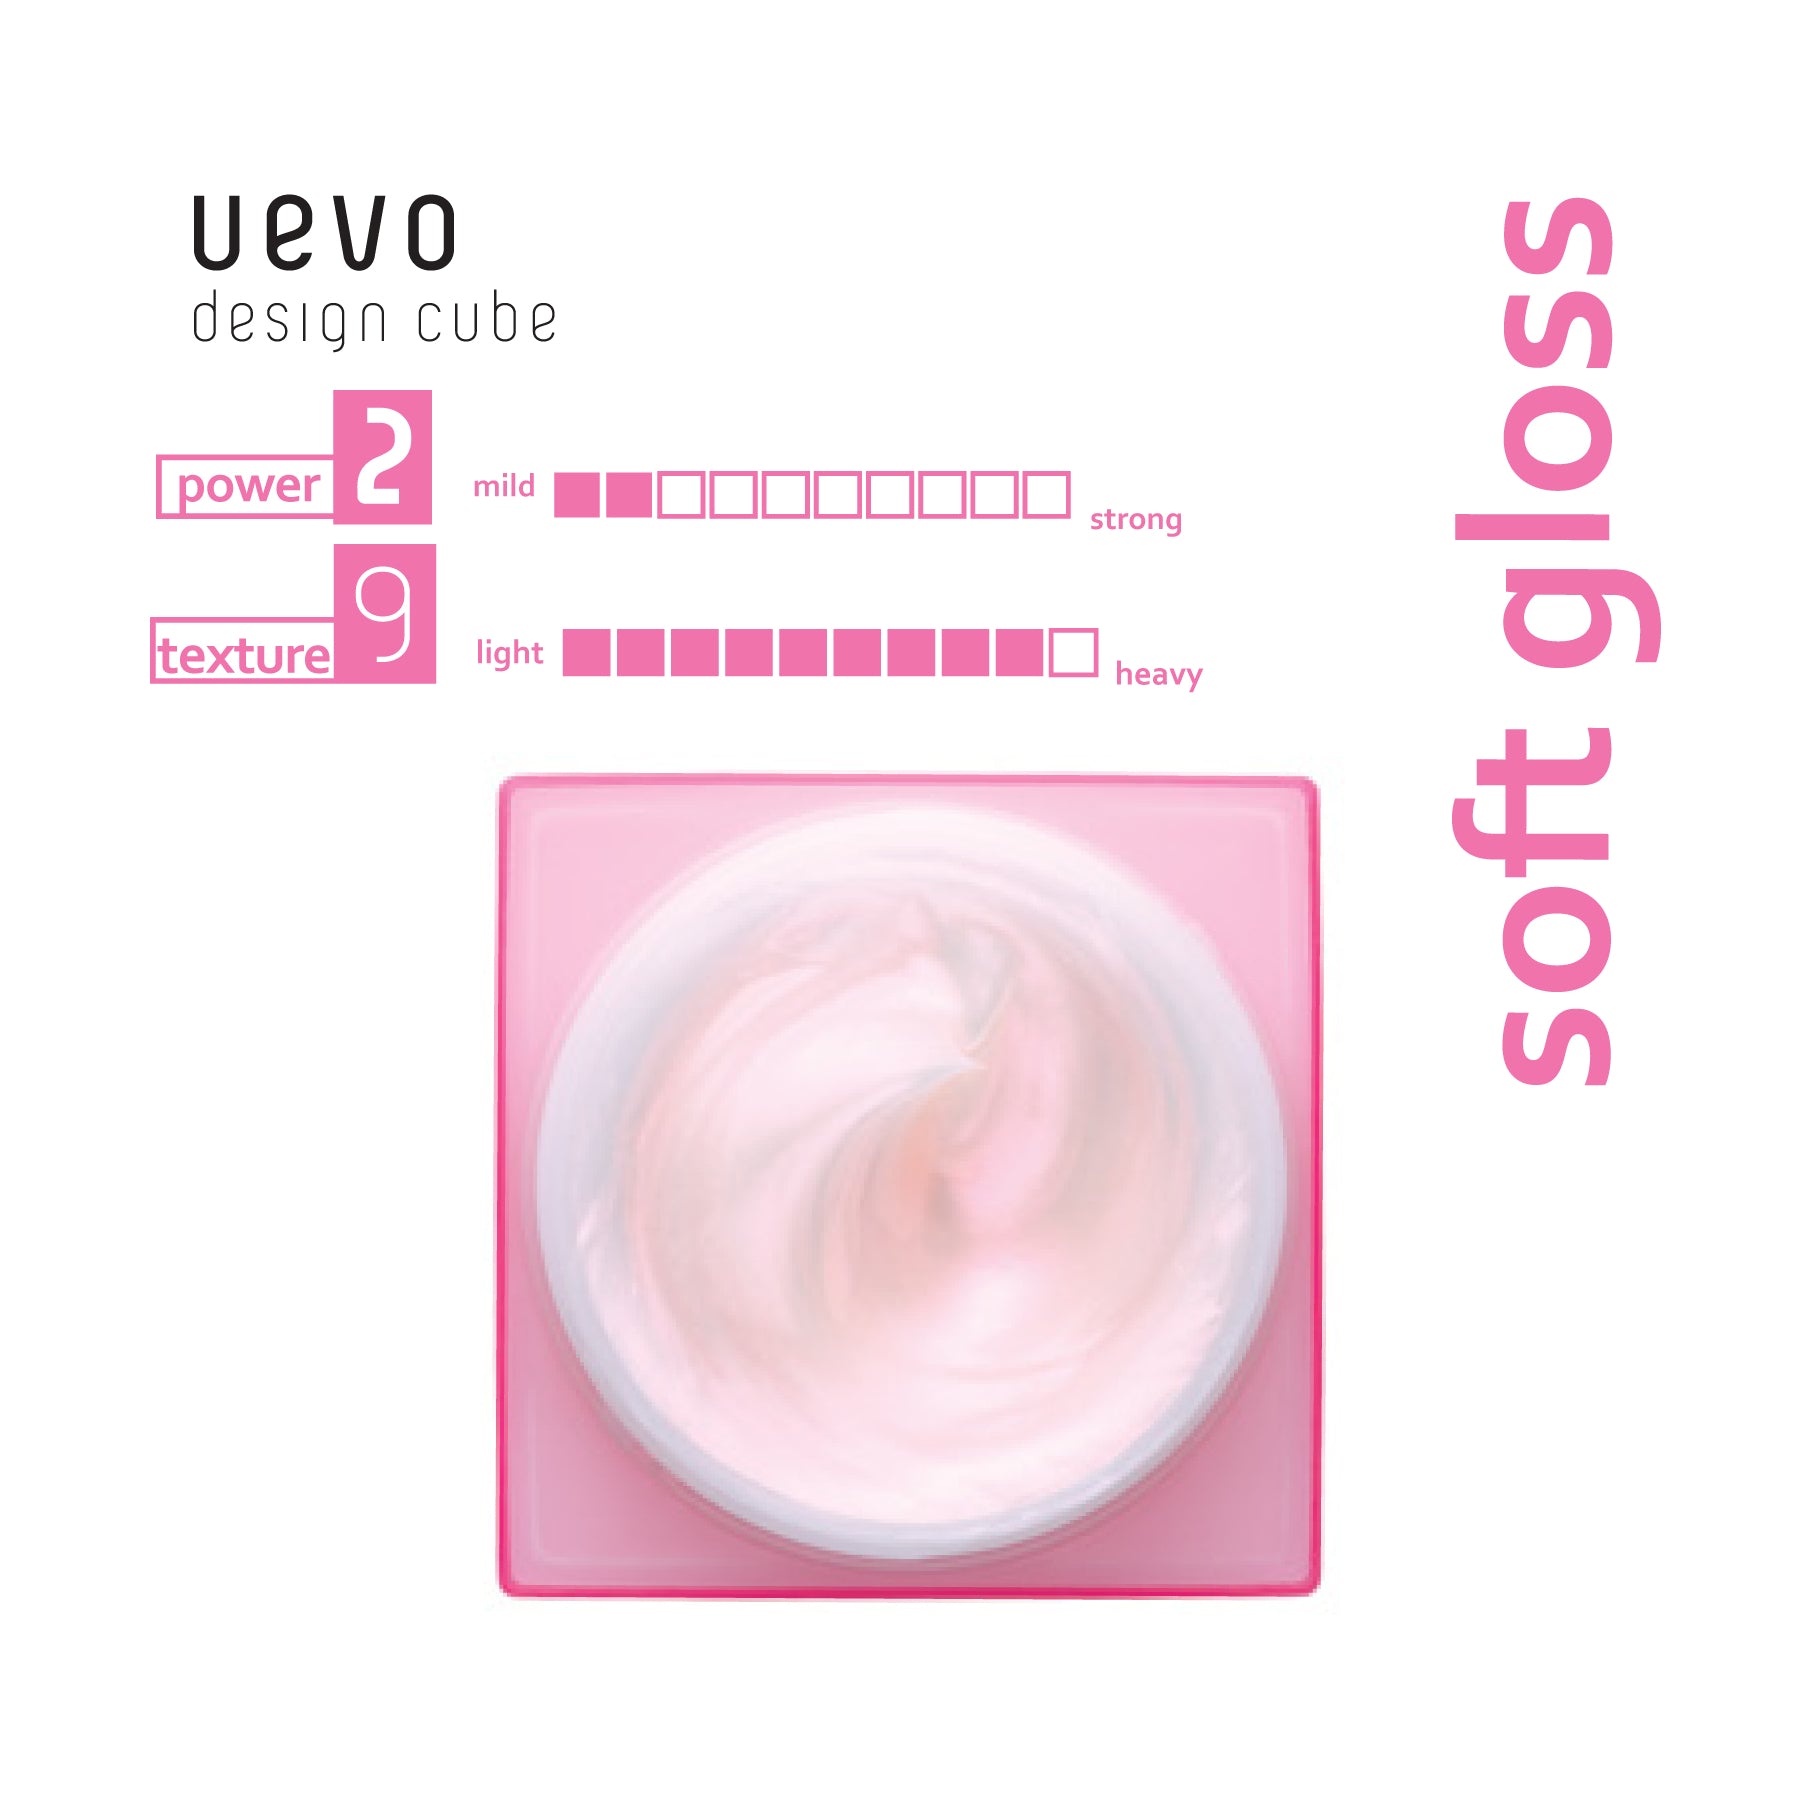 Demi Uevo Design Cube Soft Gloss Beauty Demi   